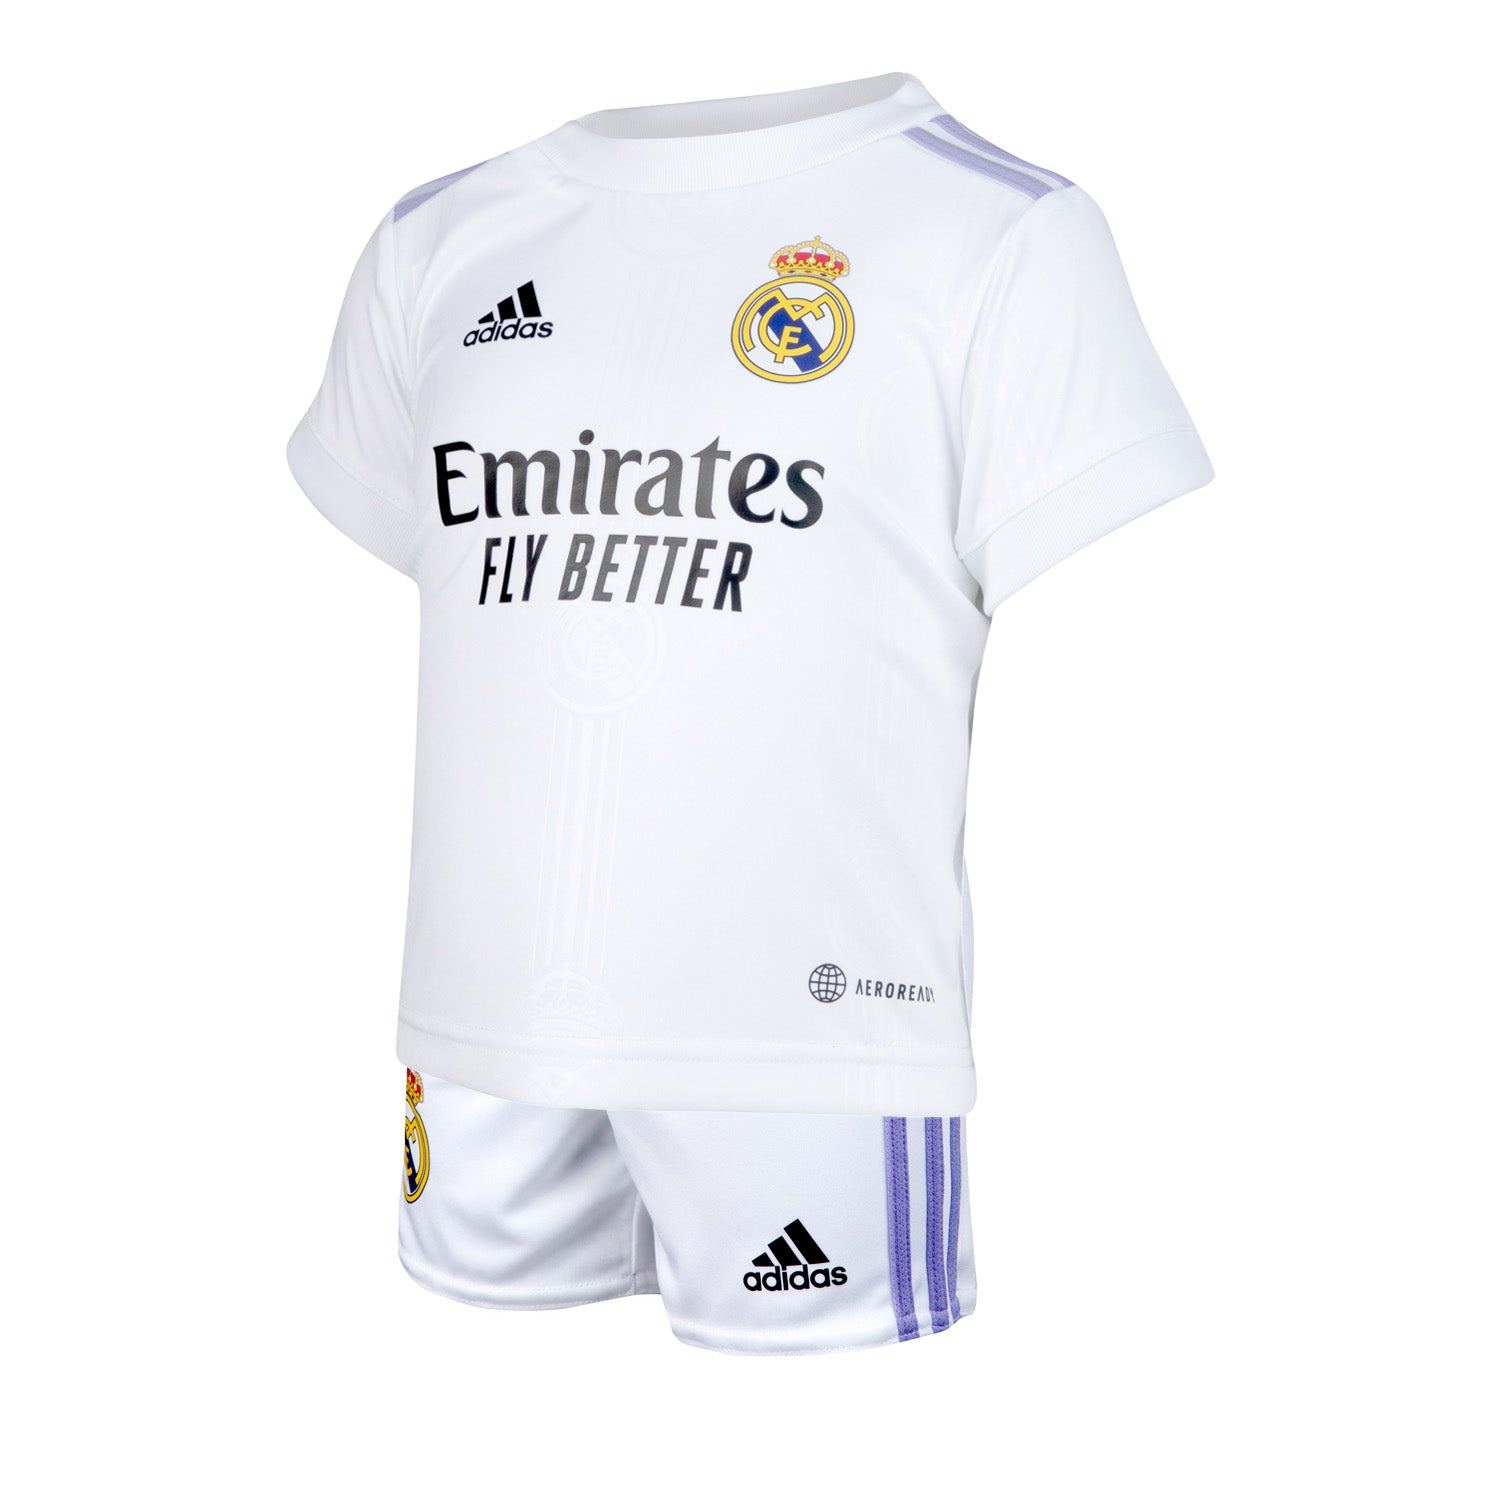 White Real Madrid Infant's Crest Babygrow New Joggers Set 